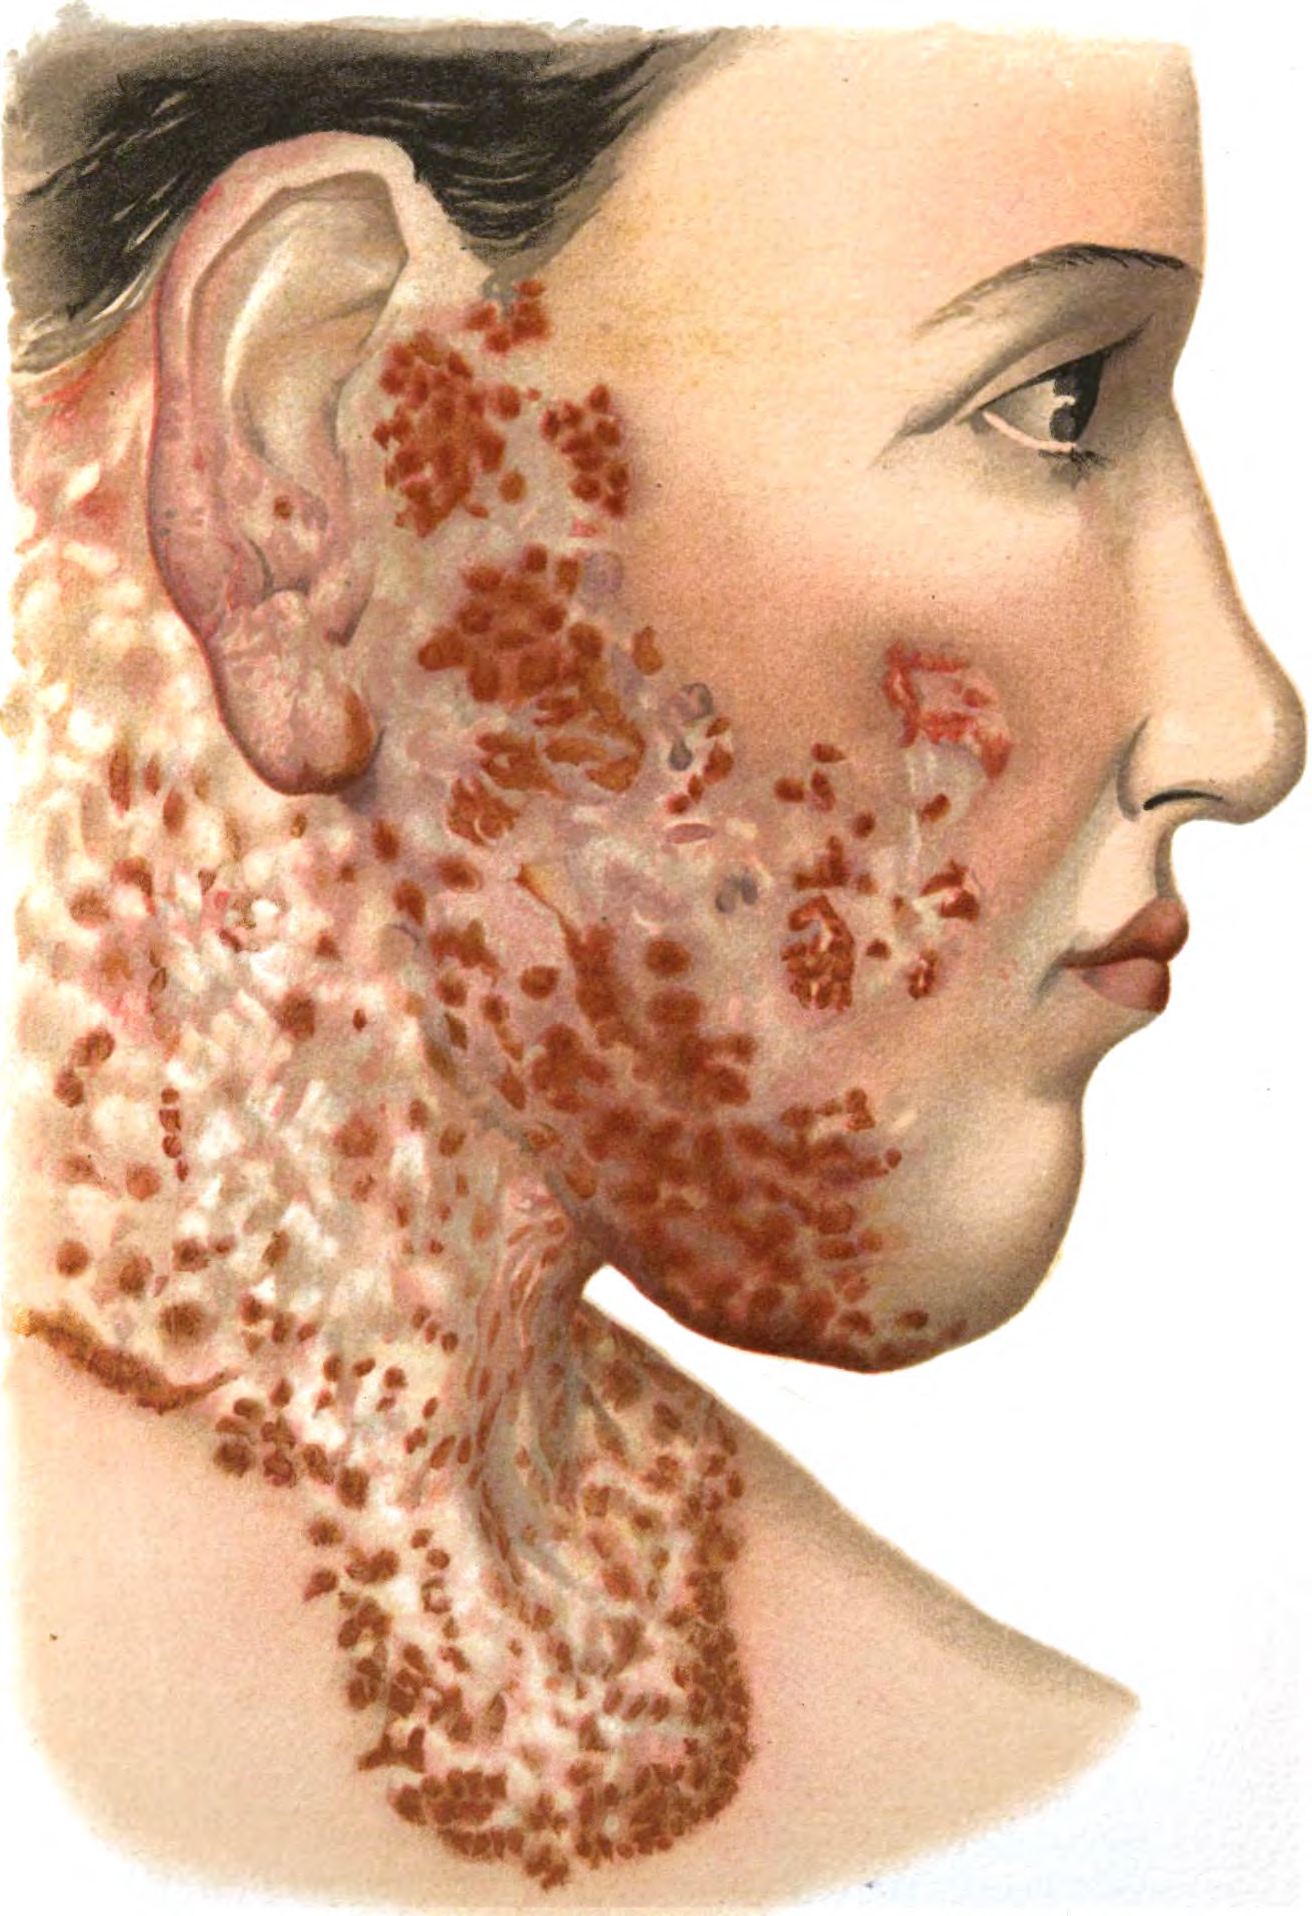 Skin nodules : MedlinePlus Medical Encyclopedia